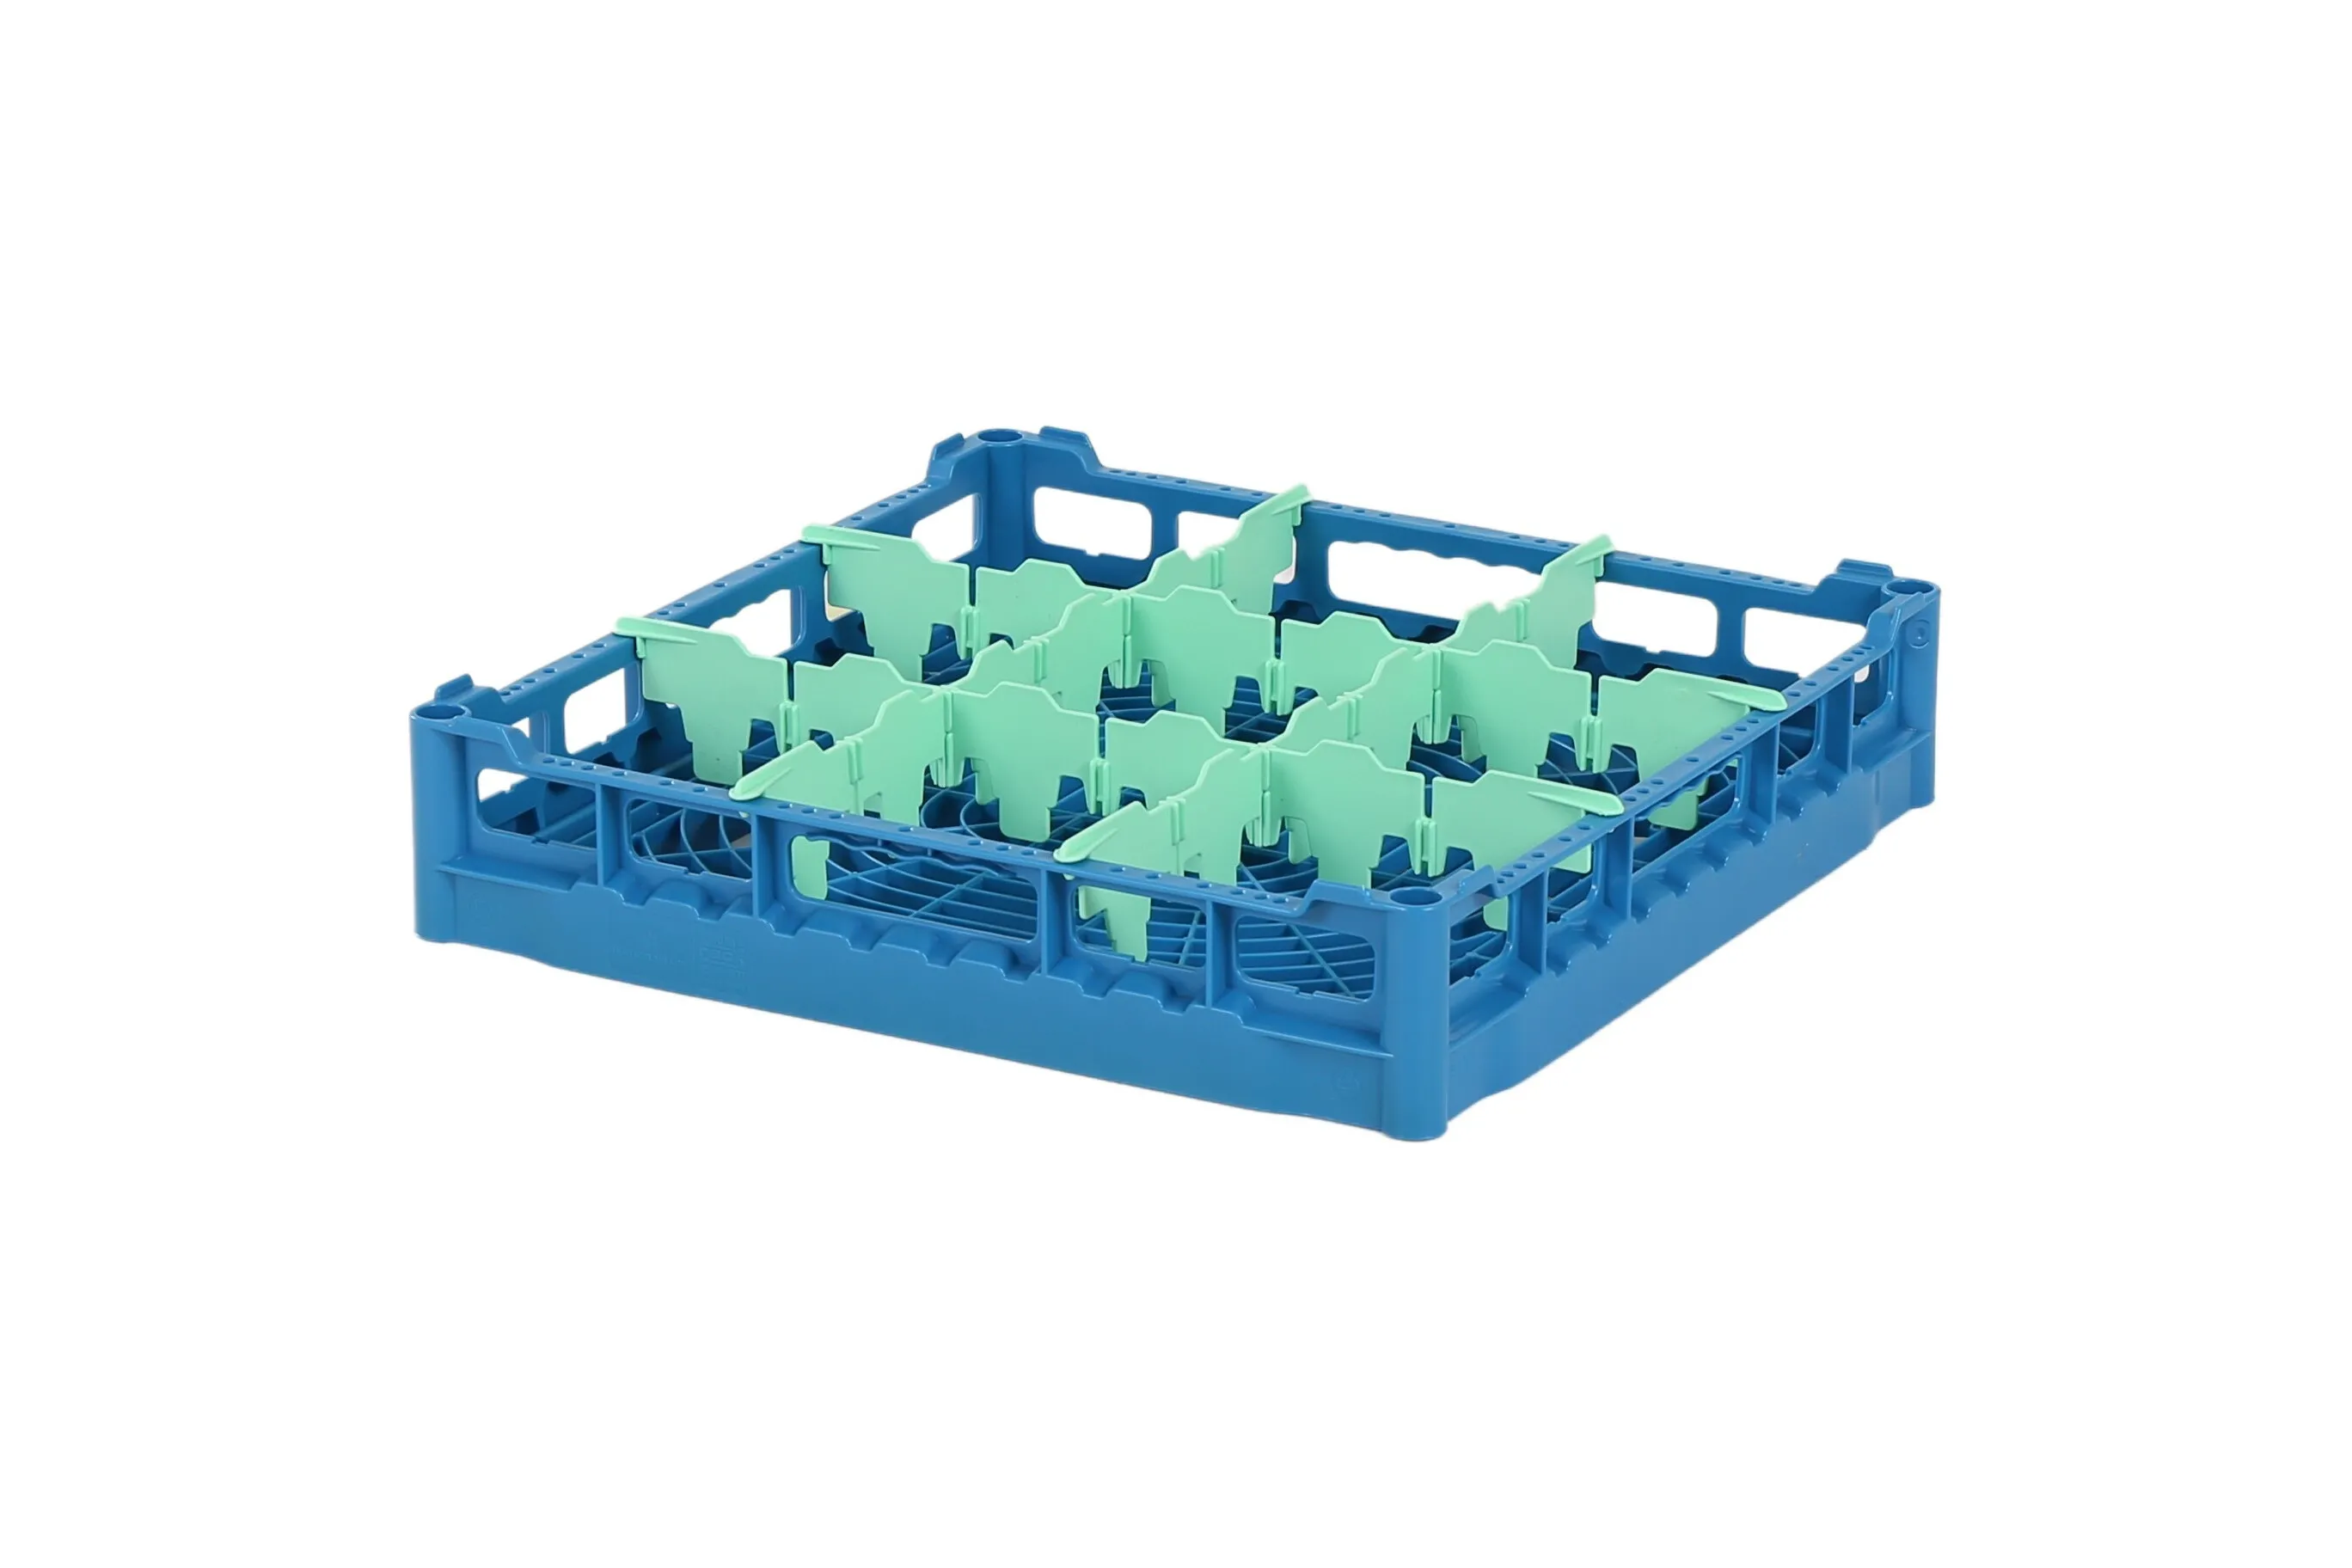 Glass basket 500x500mm blue – maximum glass height 73 mm – with green 3 x 3 compartmentalization – maximum Ø glass 149mm